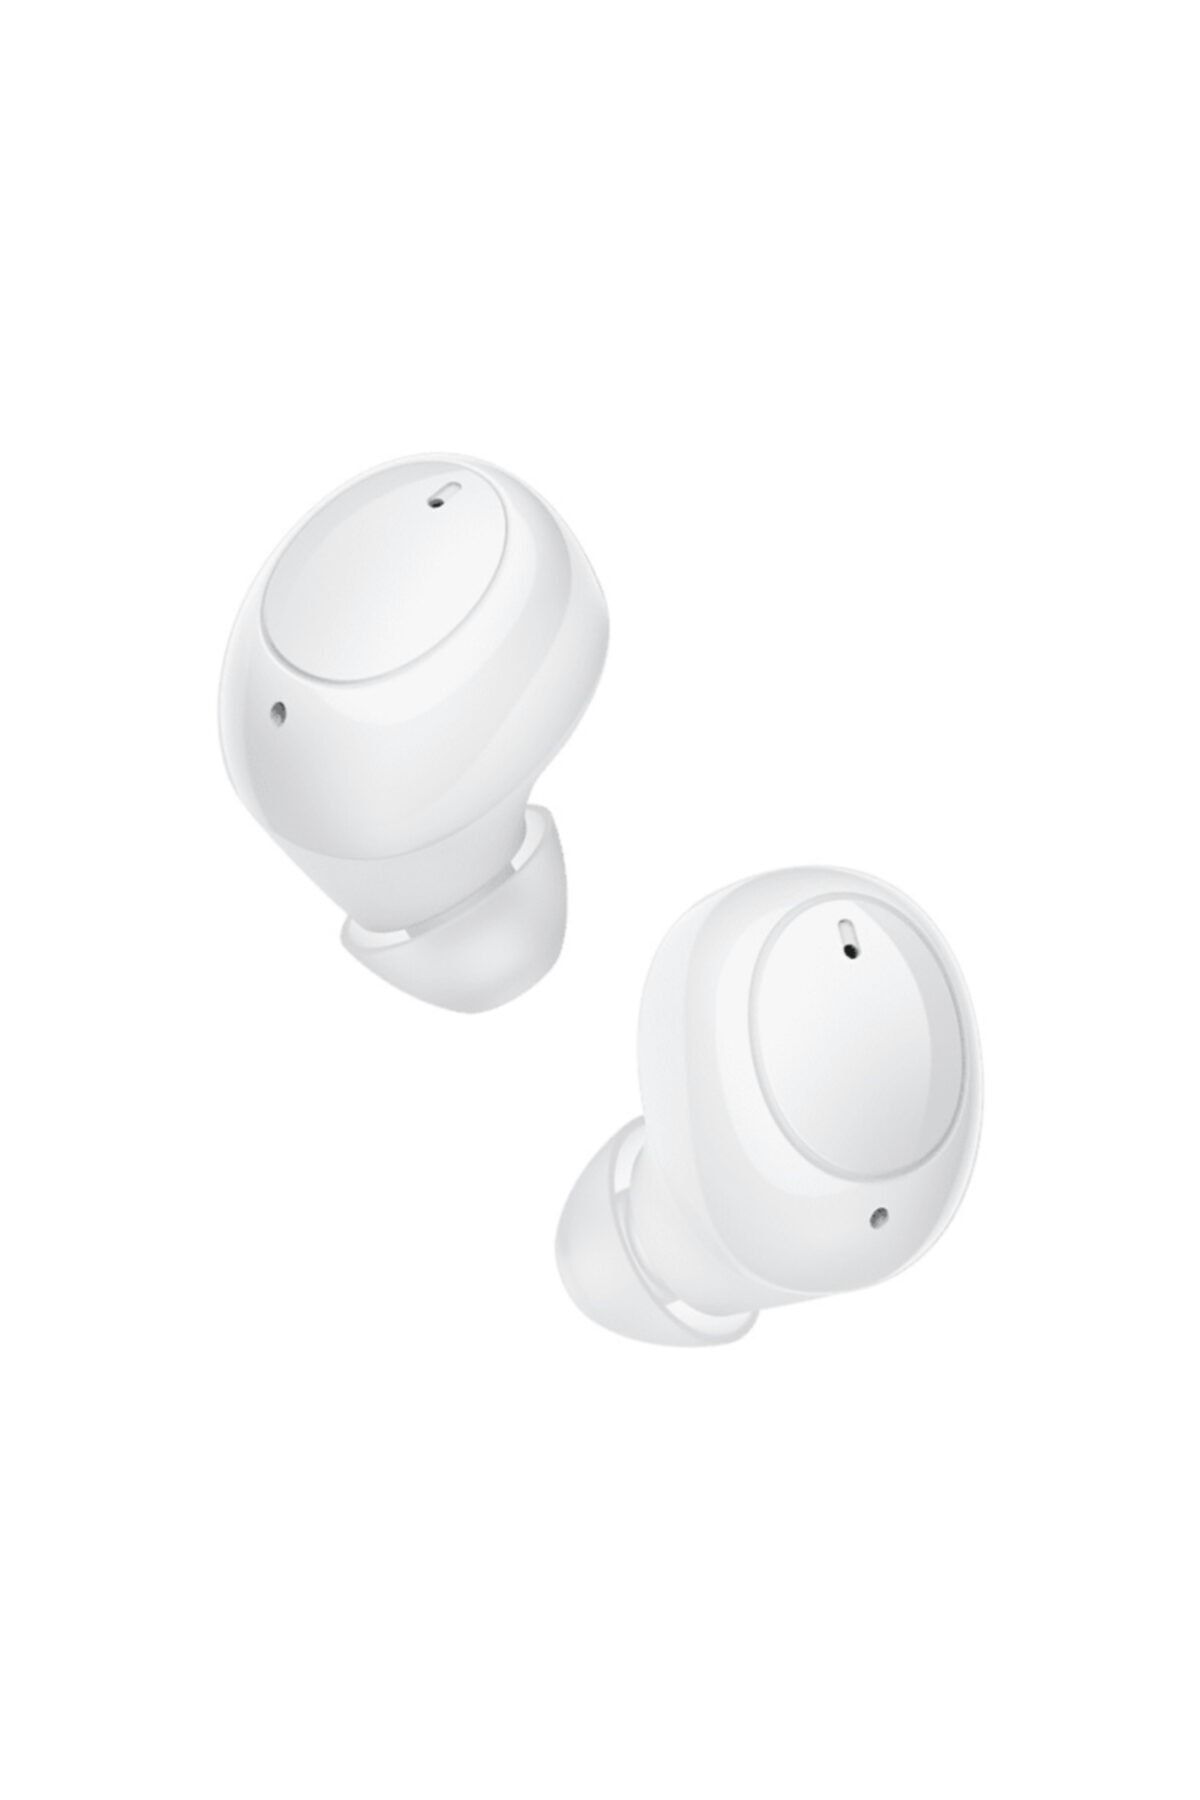 Oppo Enco Buds Kablosuz Kulaklık Bluetooth Kulak İçi Beyaz